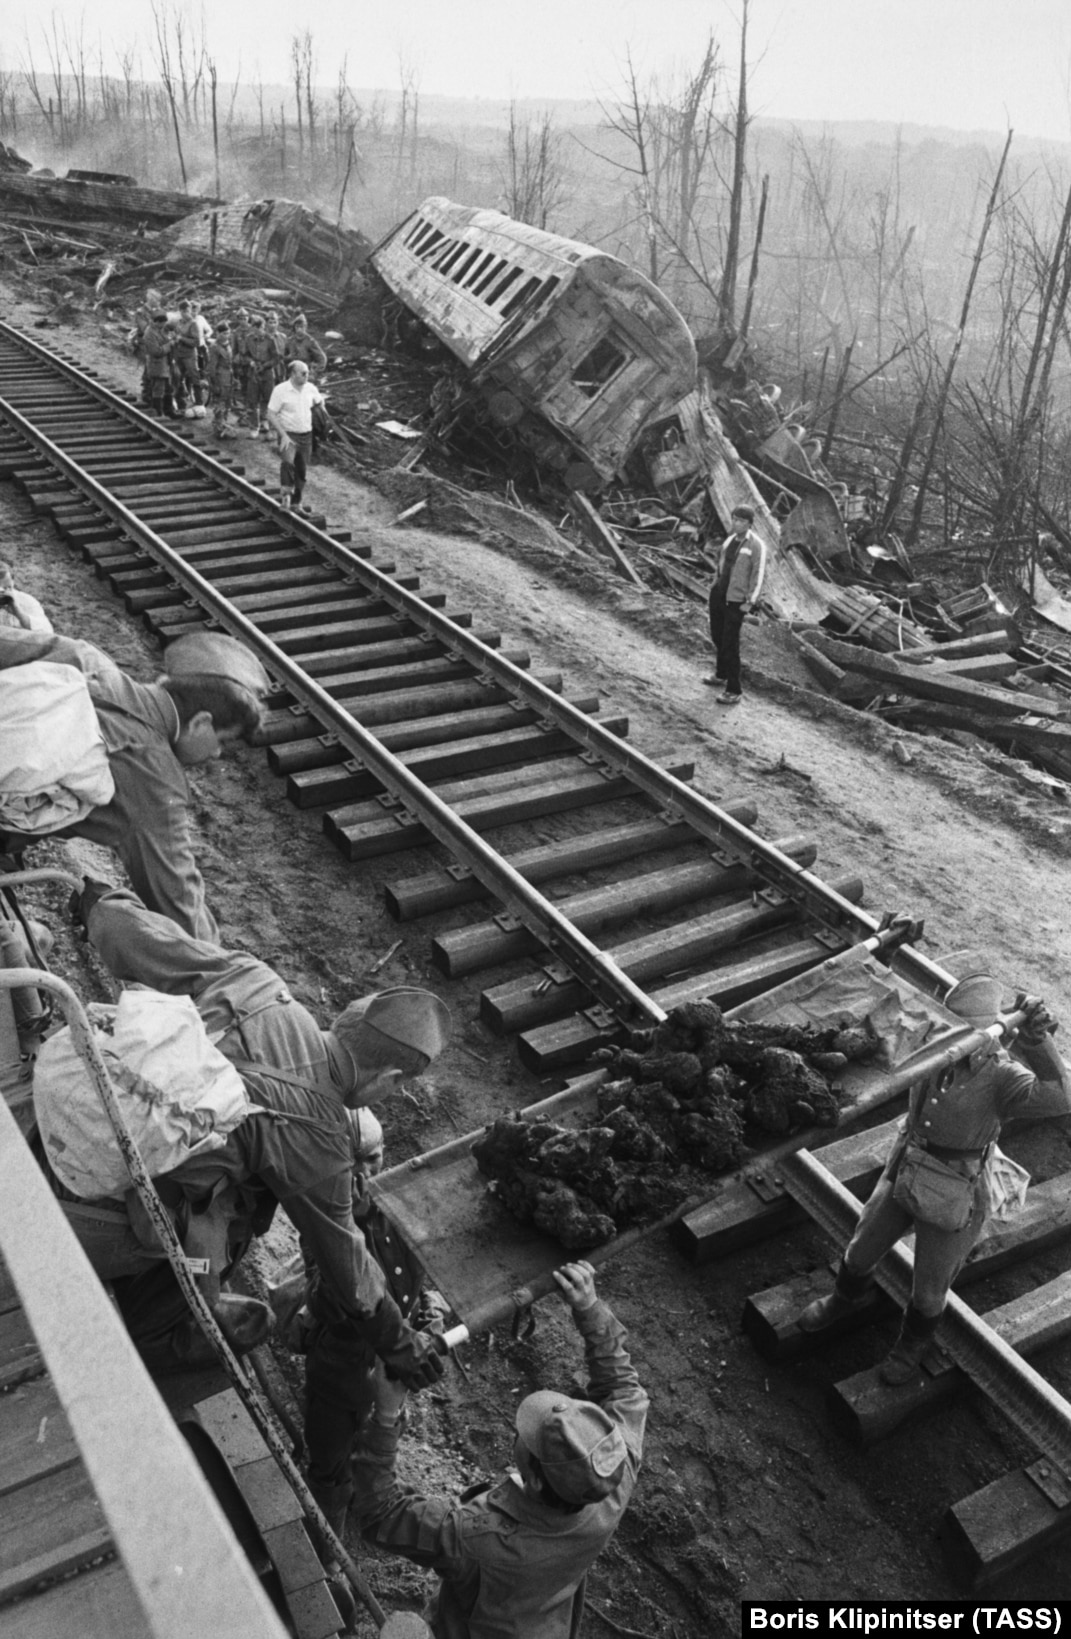 Mass Death On Soviet Rails, 30 Years Later